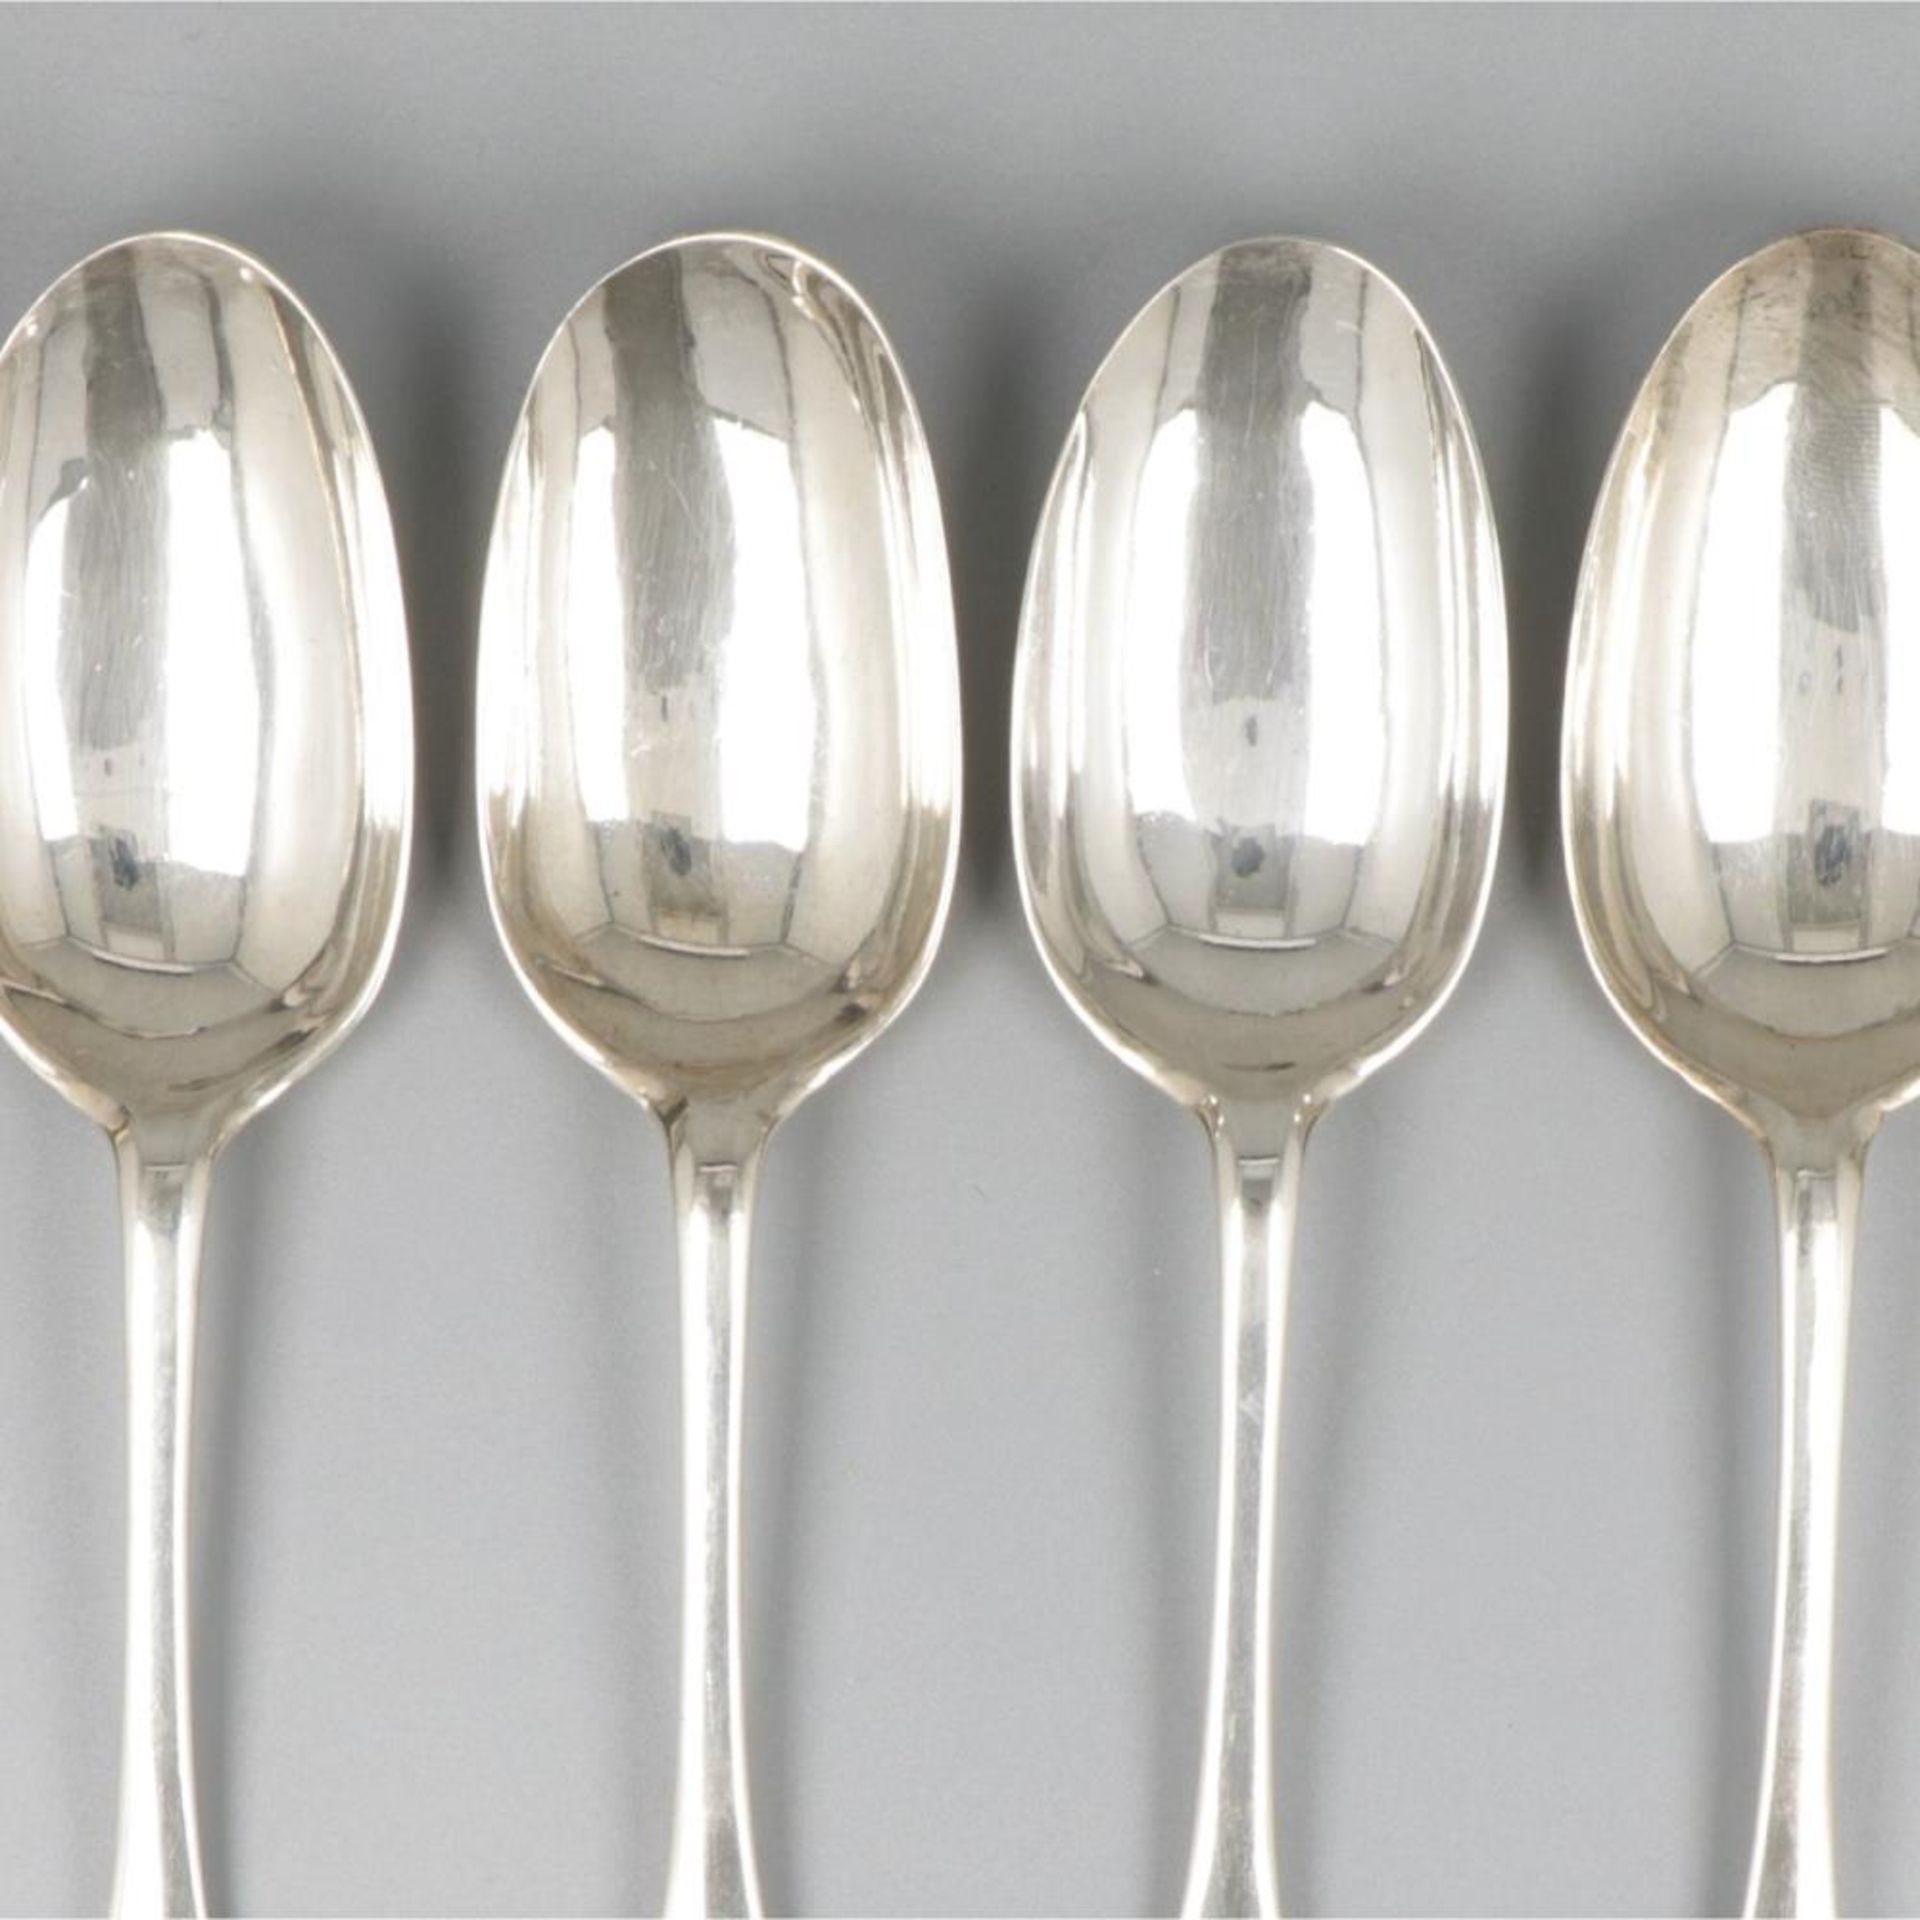 Set of 6 spoons (Bruges, Belgium, Adrianus Buschop 1756) silver. - Image 5 of 8